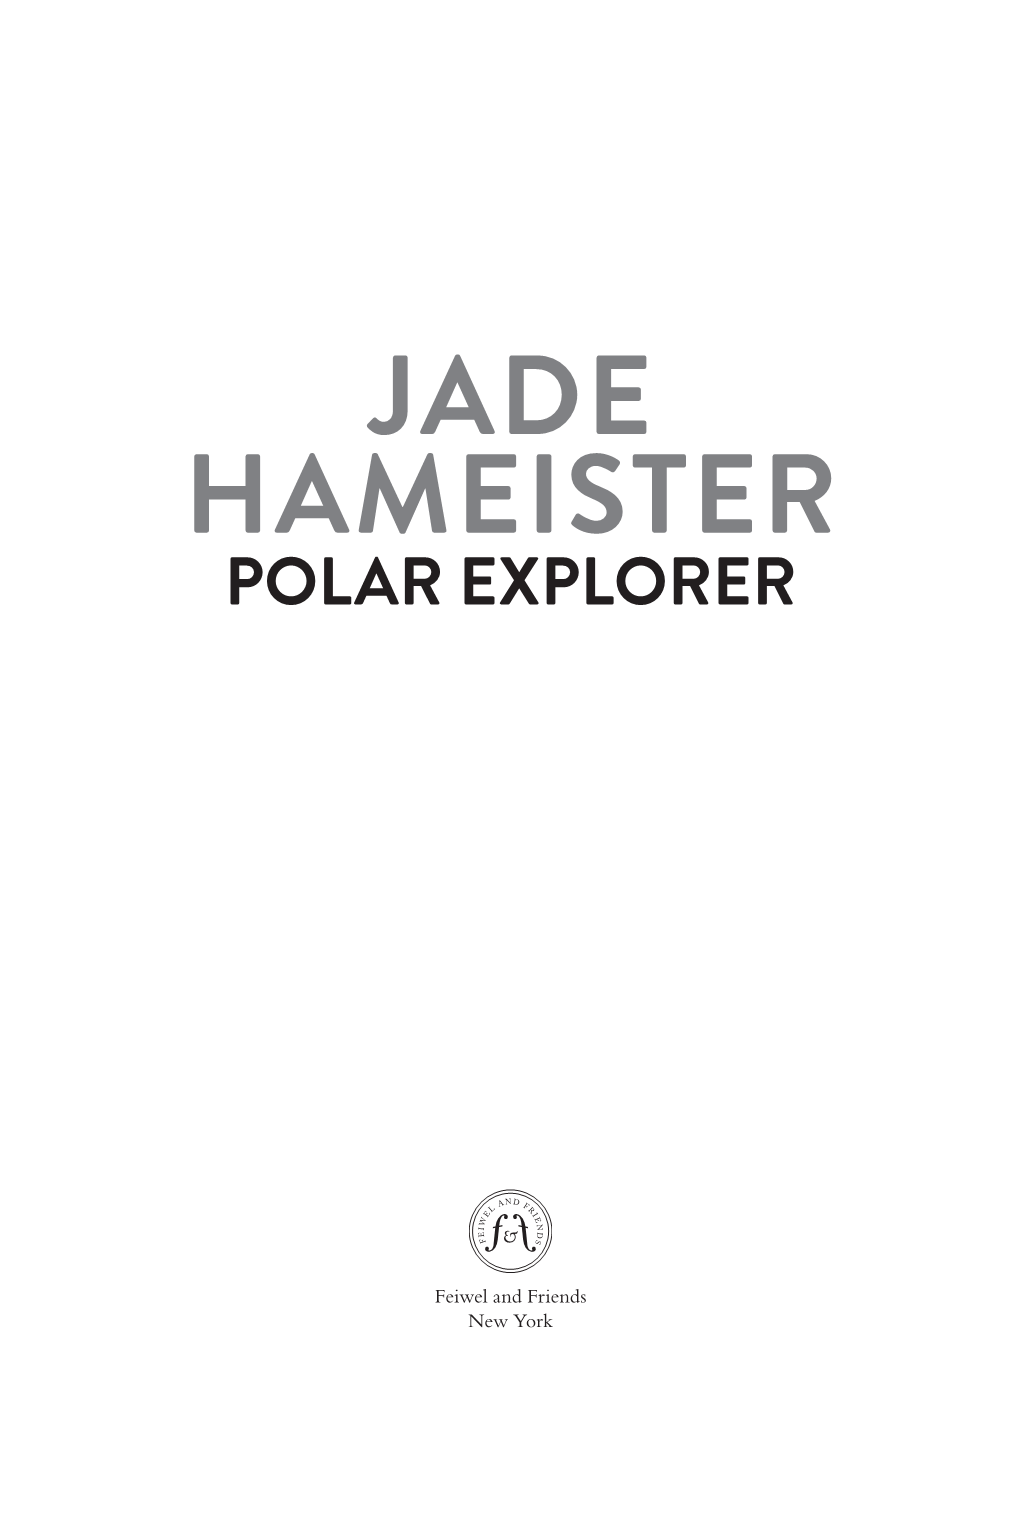 Jade Hameister Polar Explorer